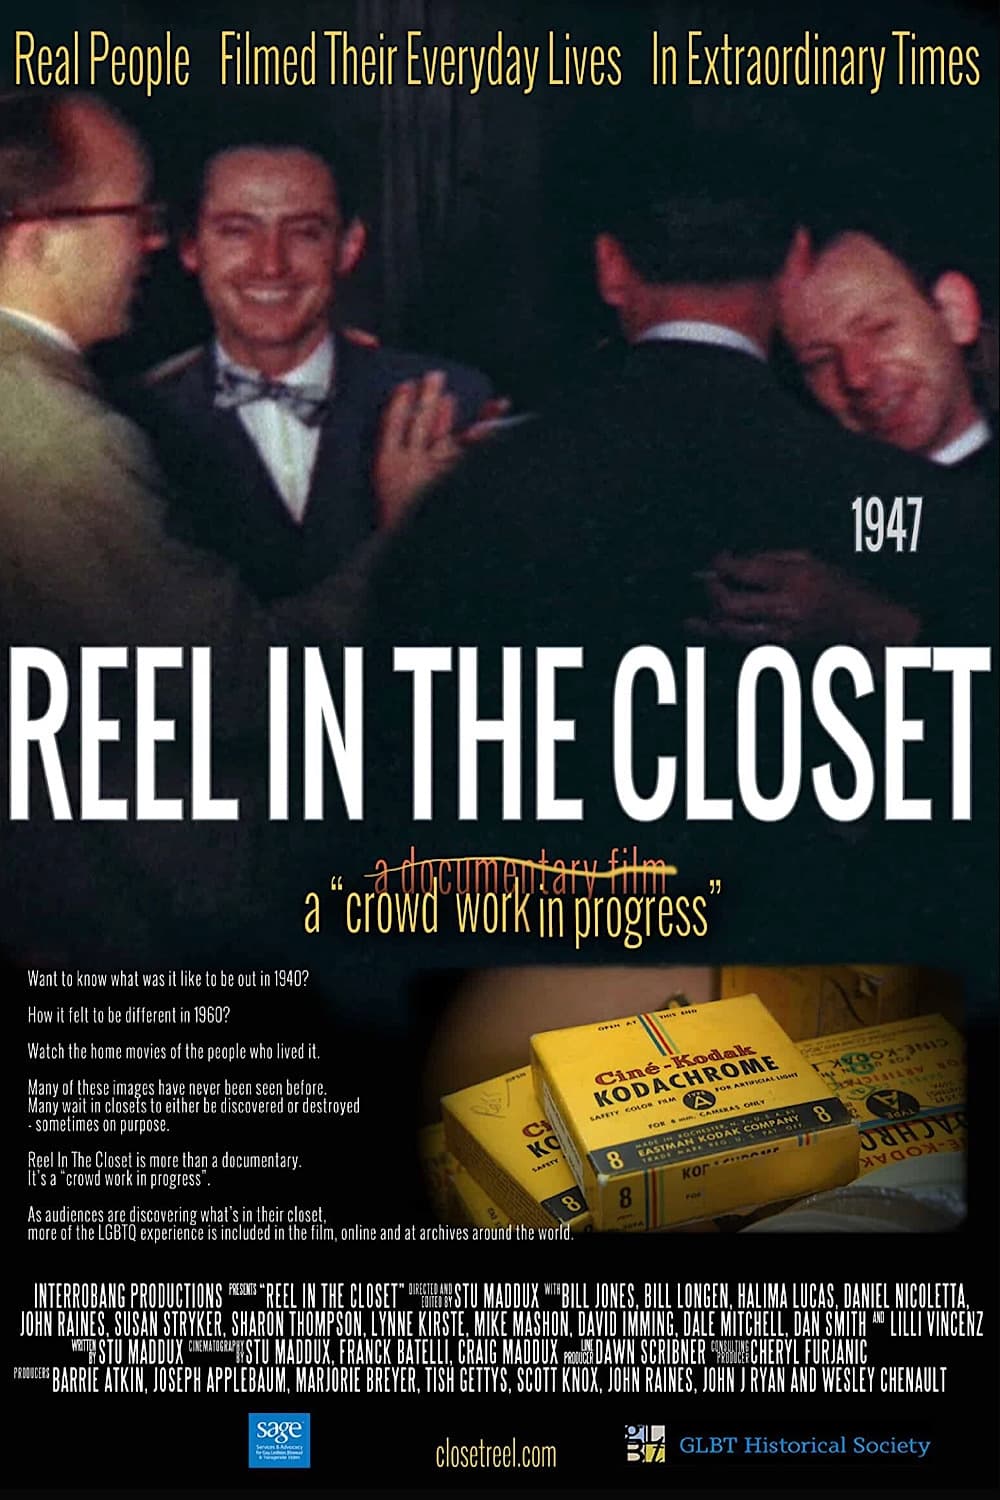 Reel in the Closet